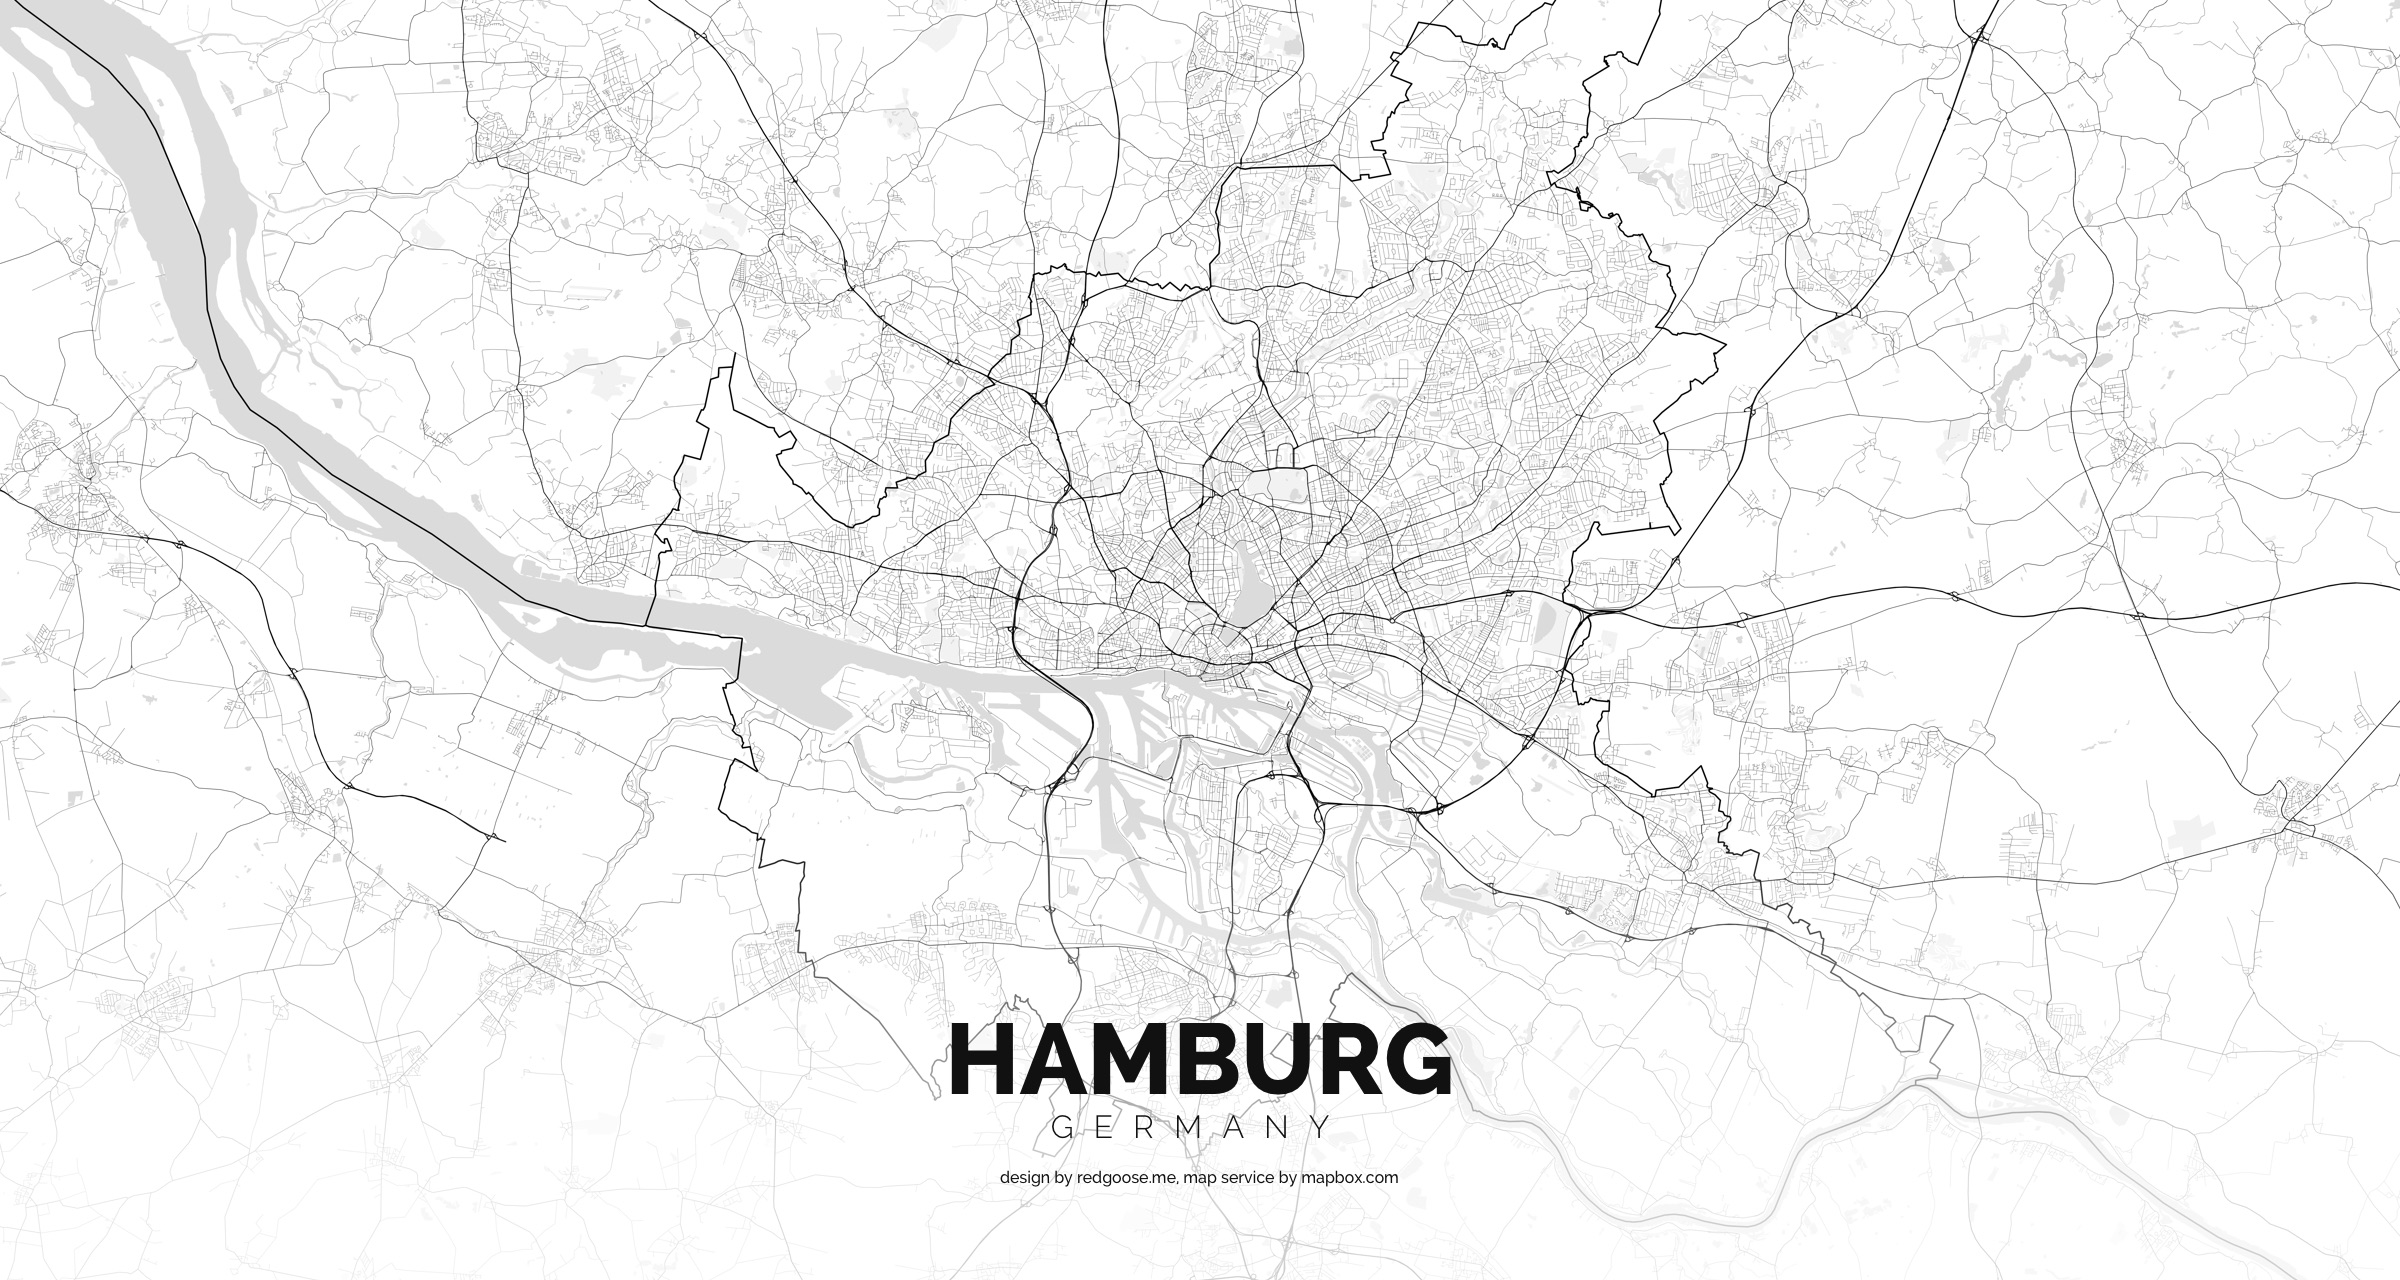 Germany_-_Hamburg.jpg